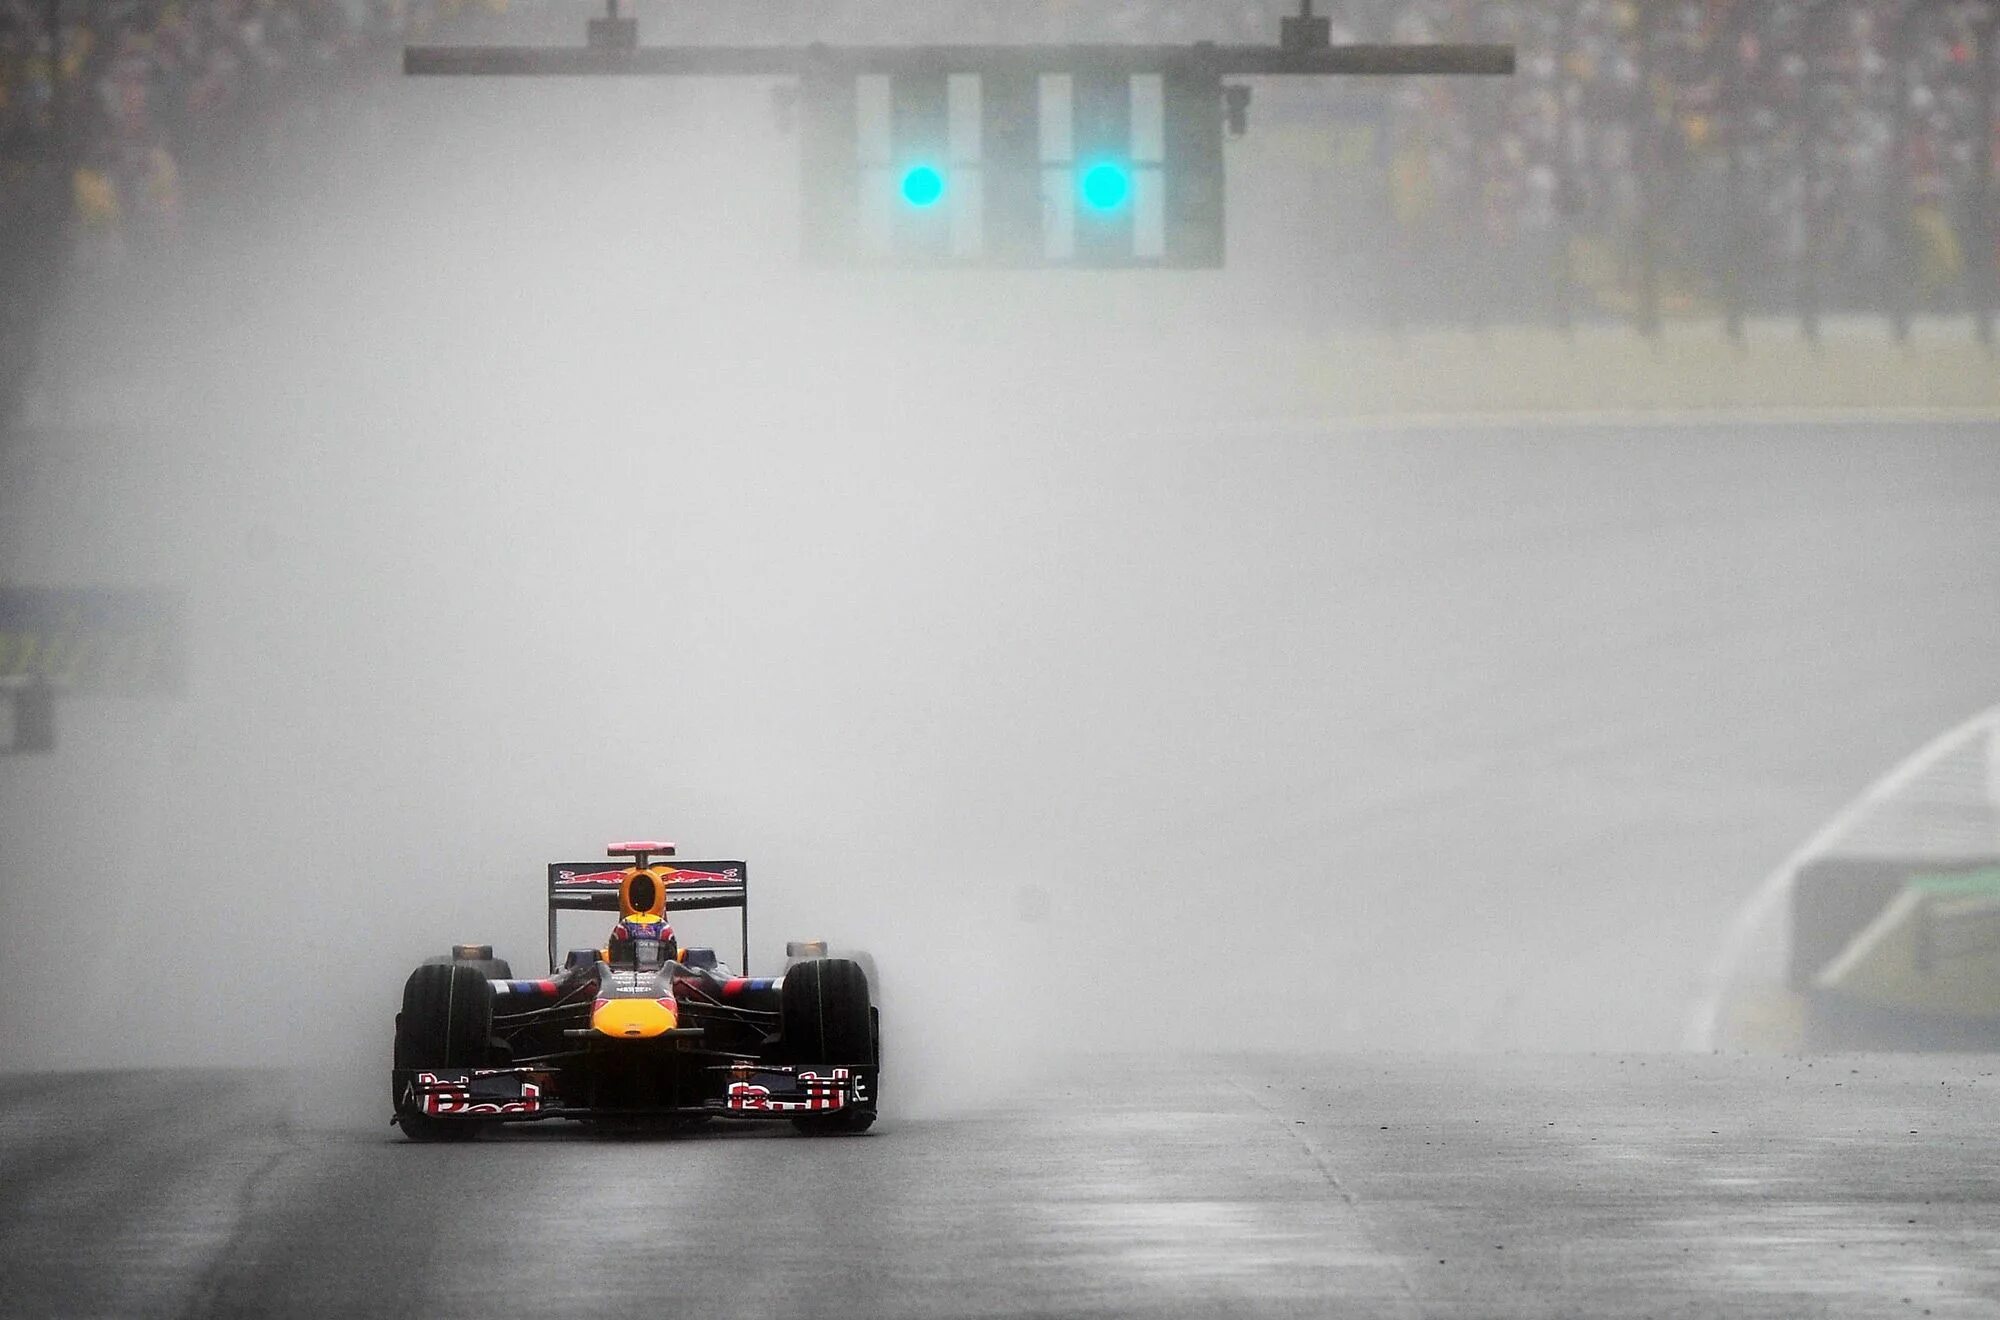 F1 Rain. F1 2009 Rain Tyres. Rain f1 car. Формула 1 дождь.